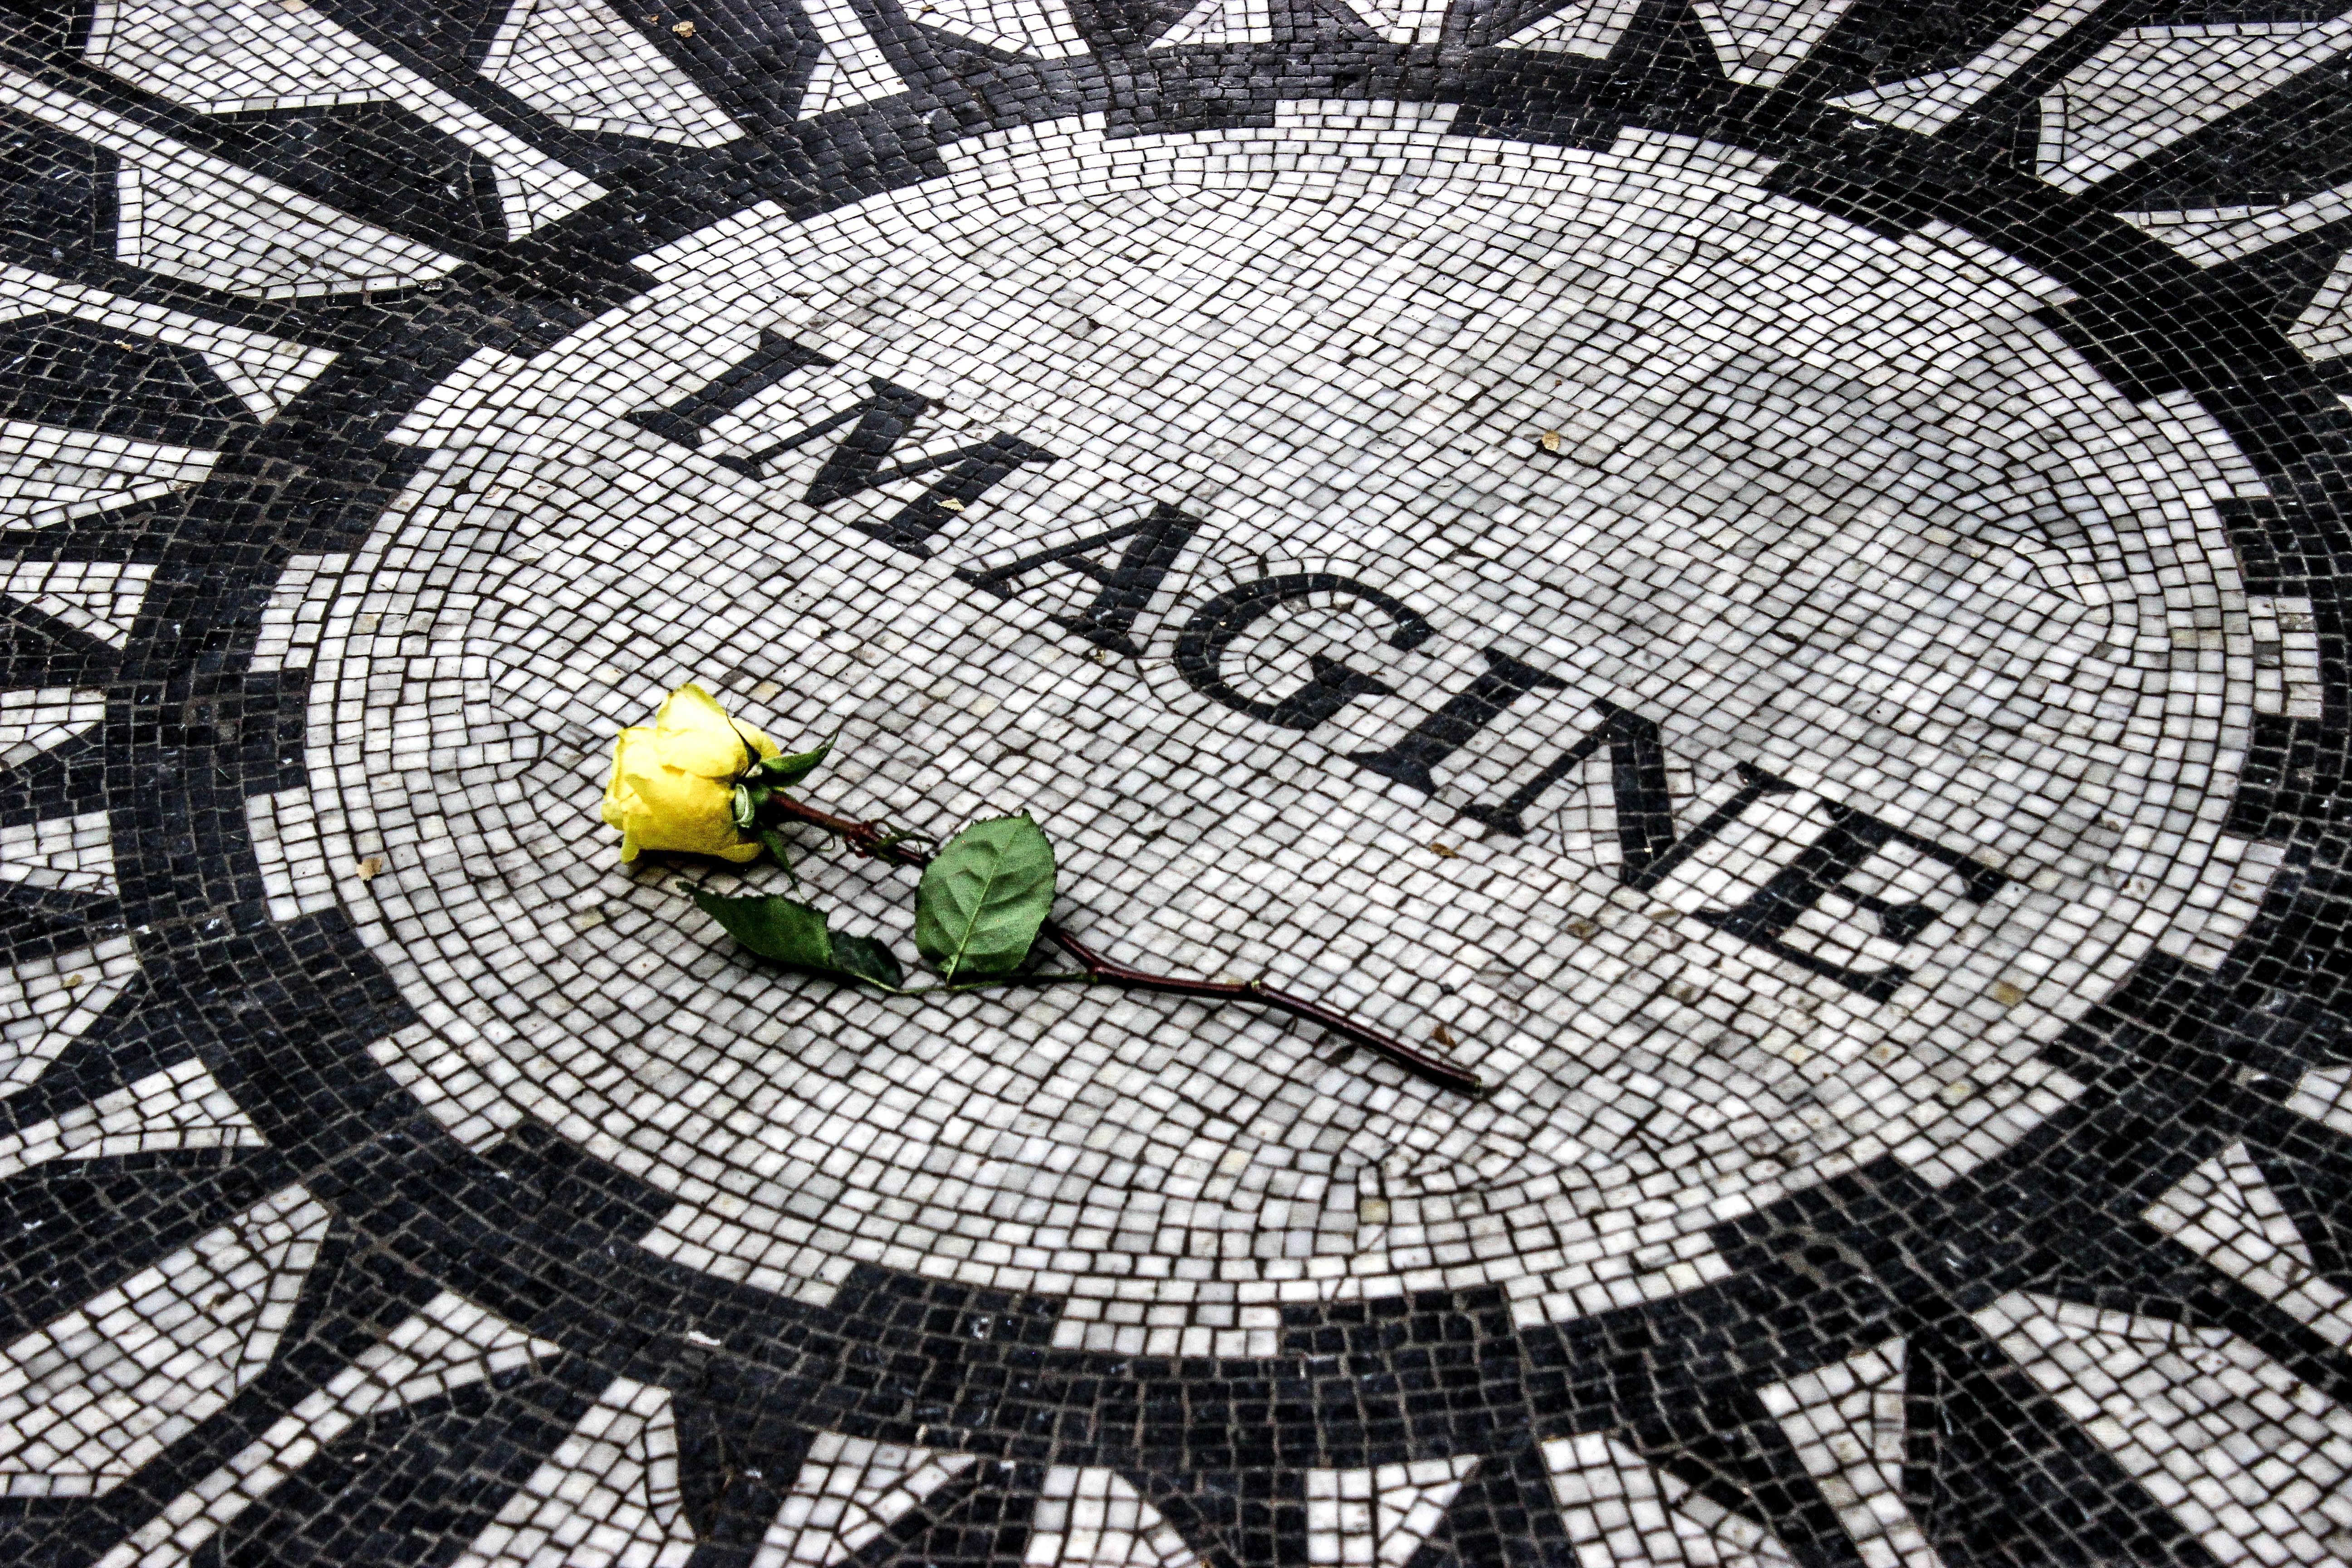 Imagine Mosaic with Yellow Rose